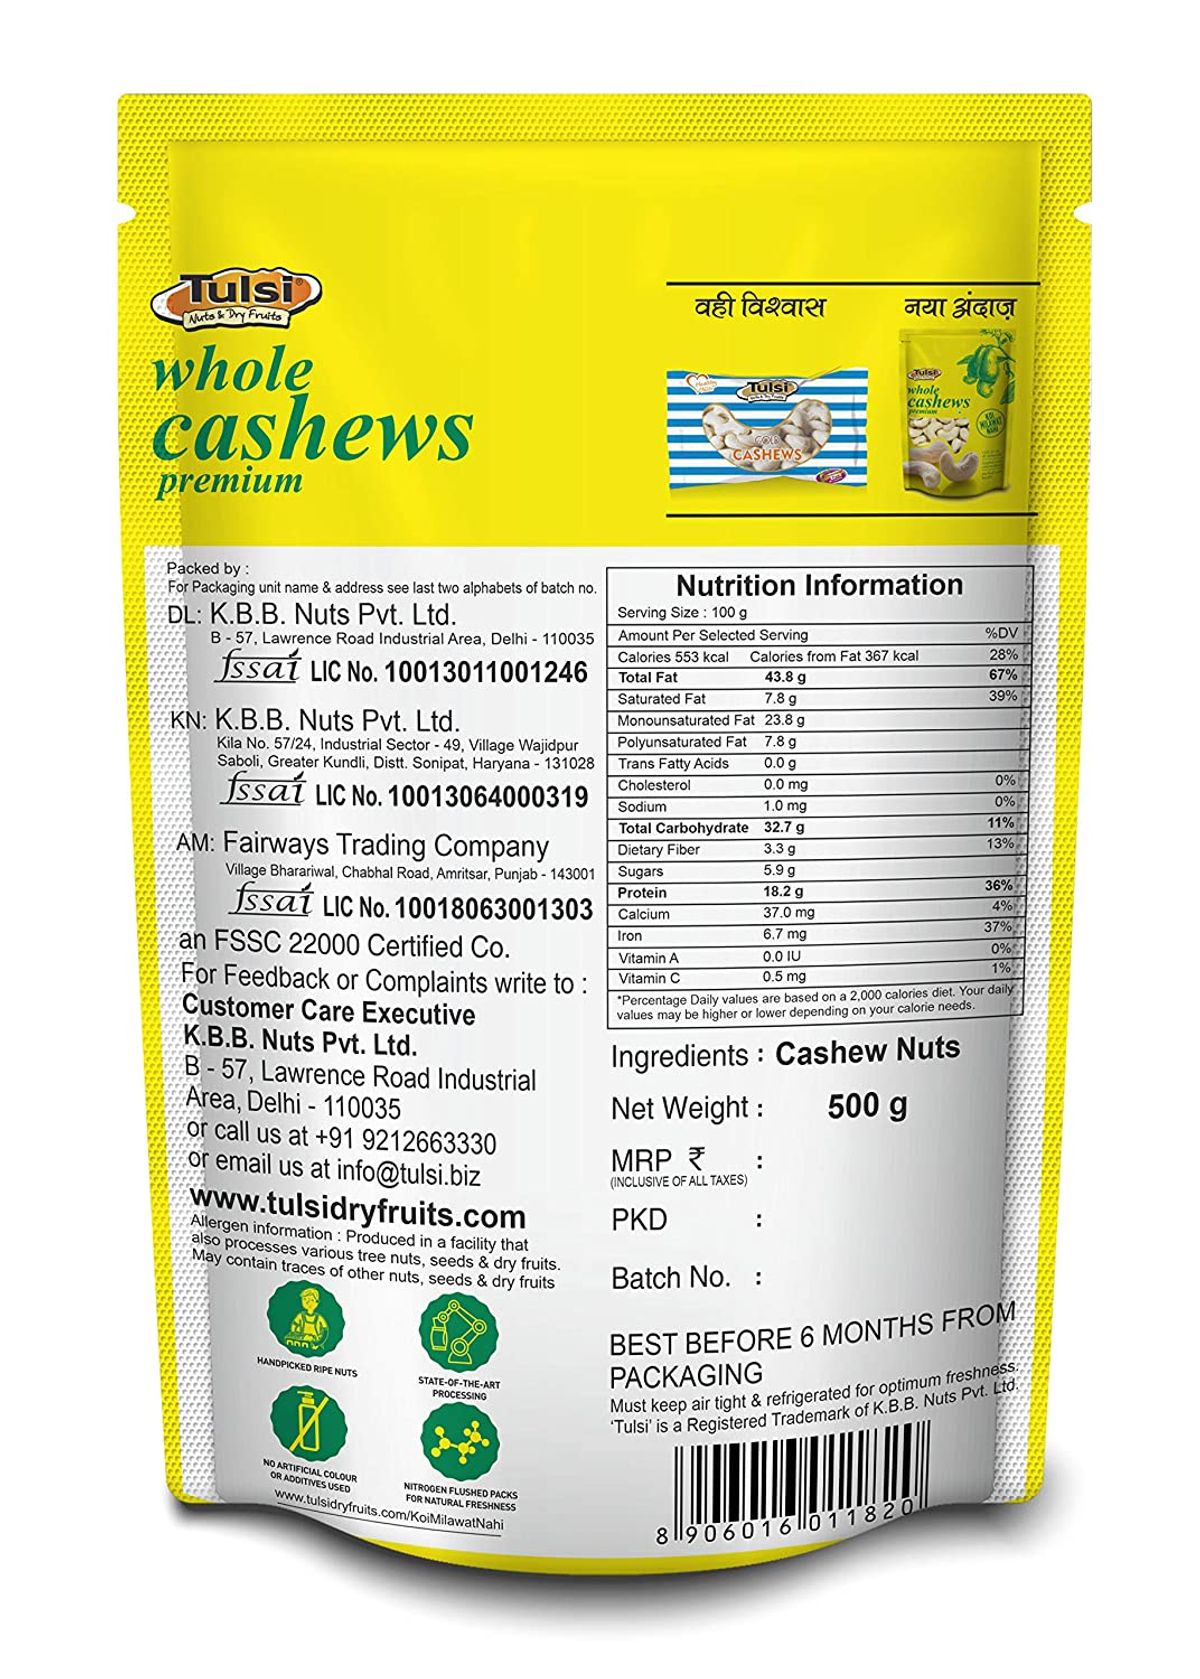 Tulsi Whole Cashew Premium Image